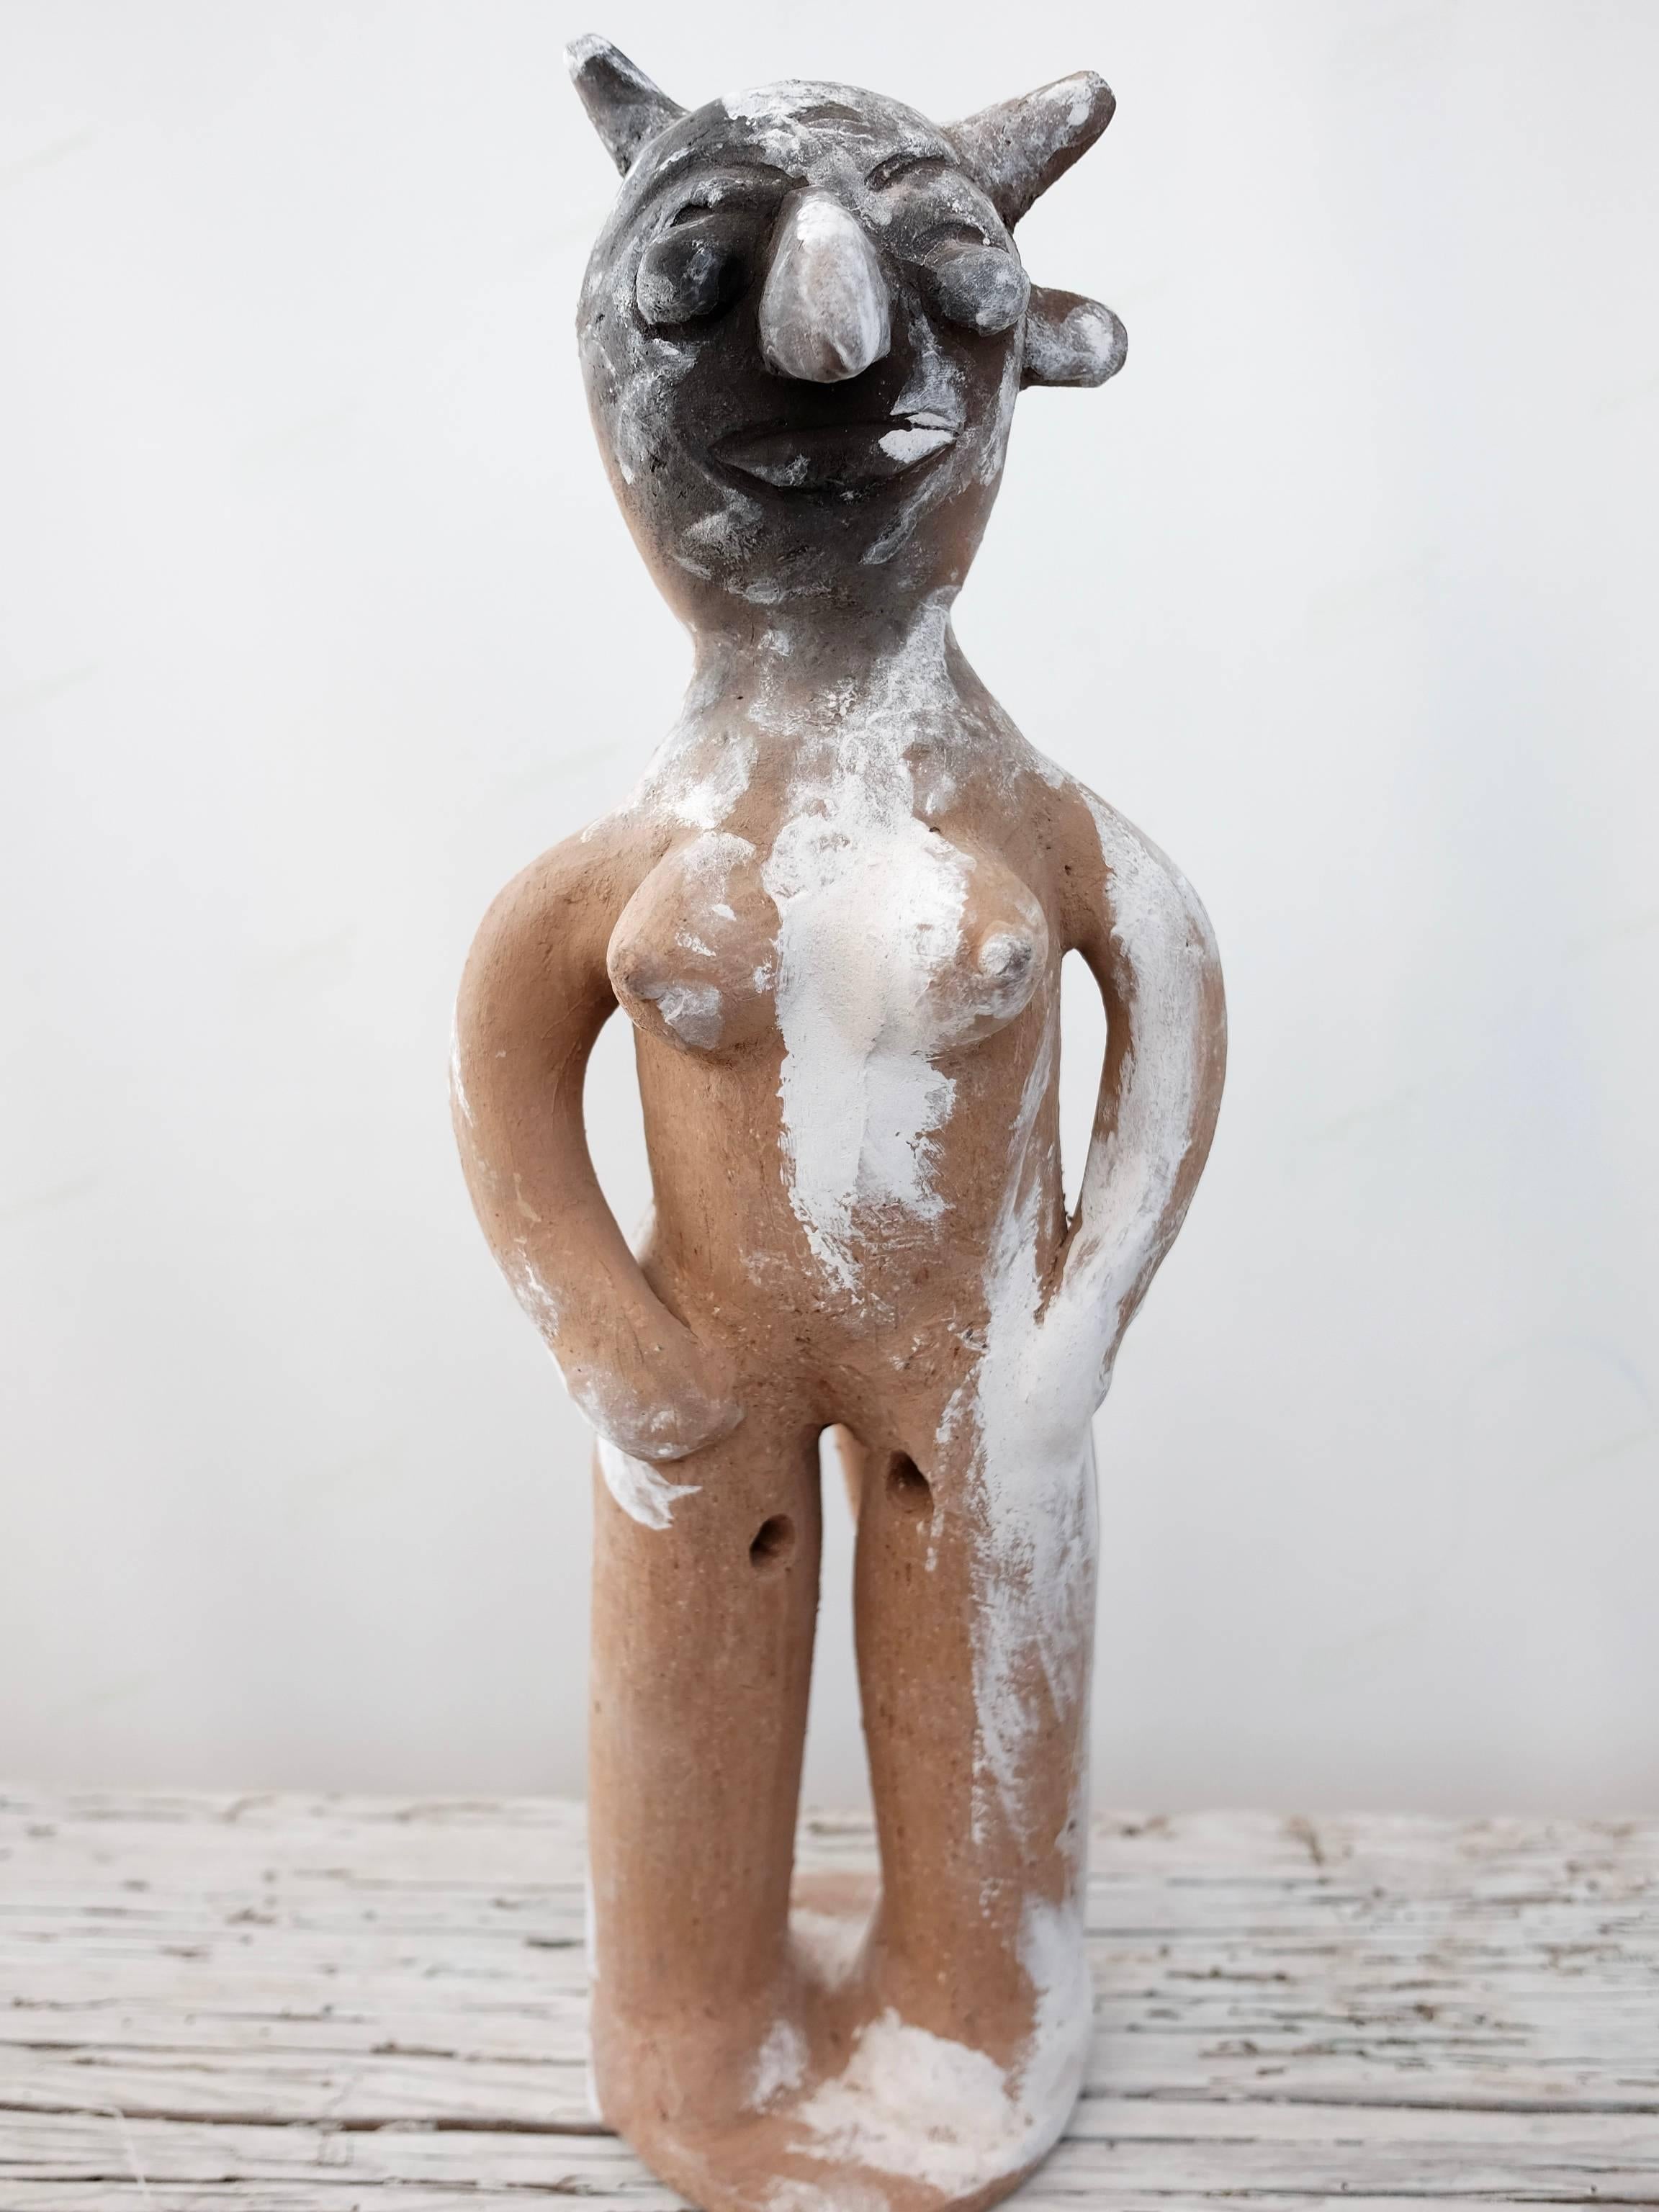 Folk Art Contemporary Clay Sculpture by Serapio Medrano from Jalisco, Mexico